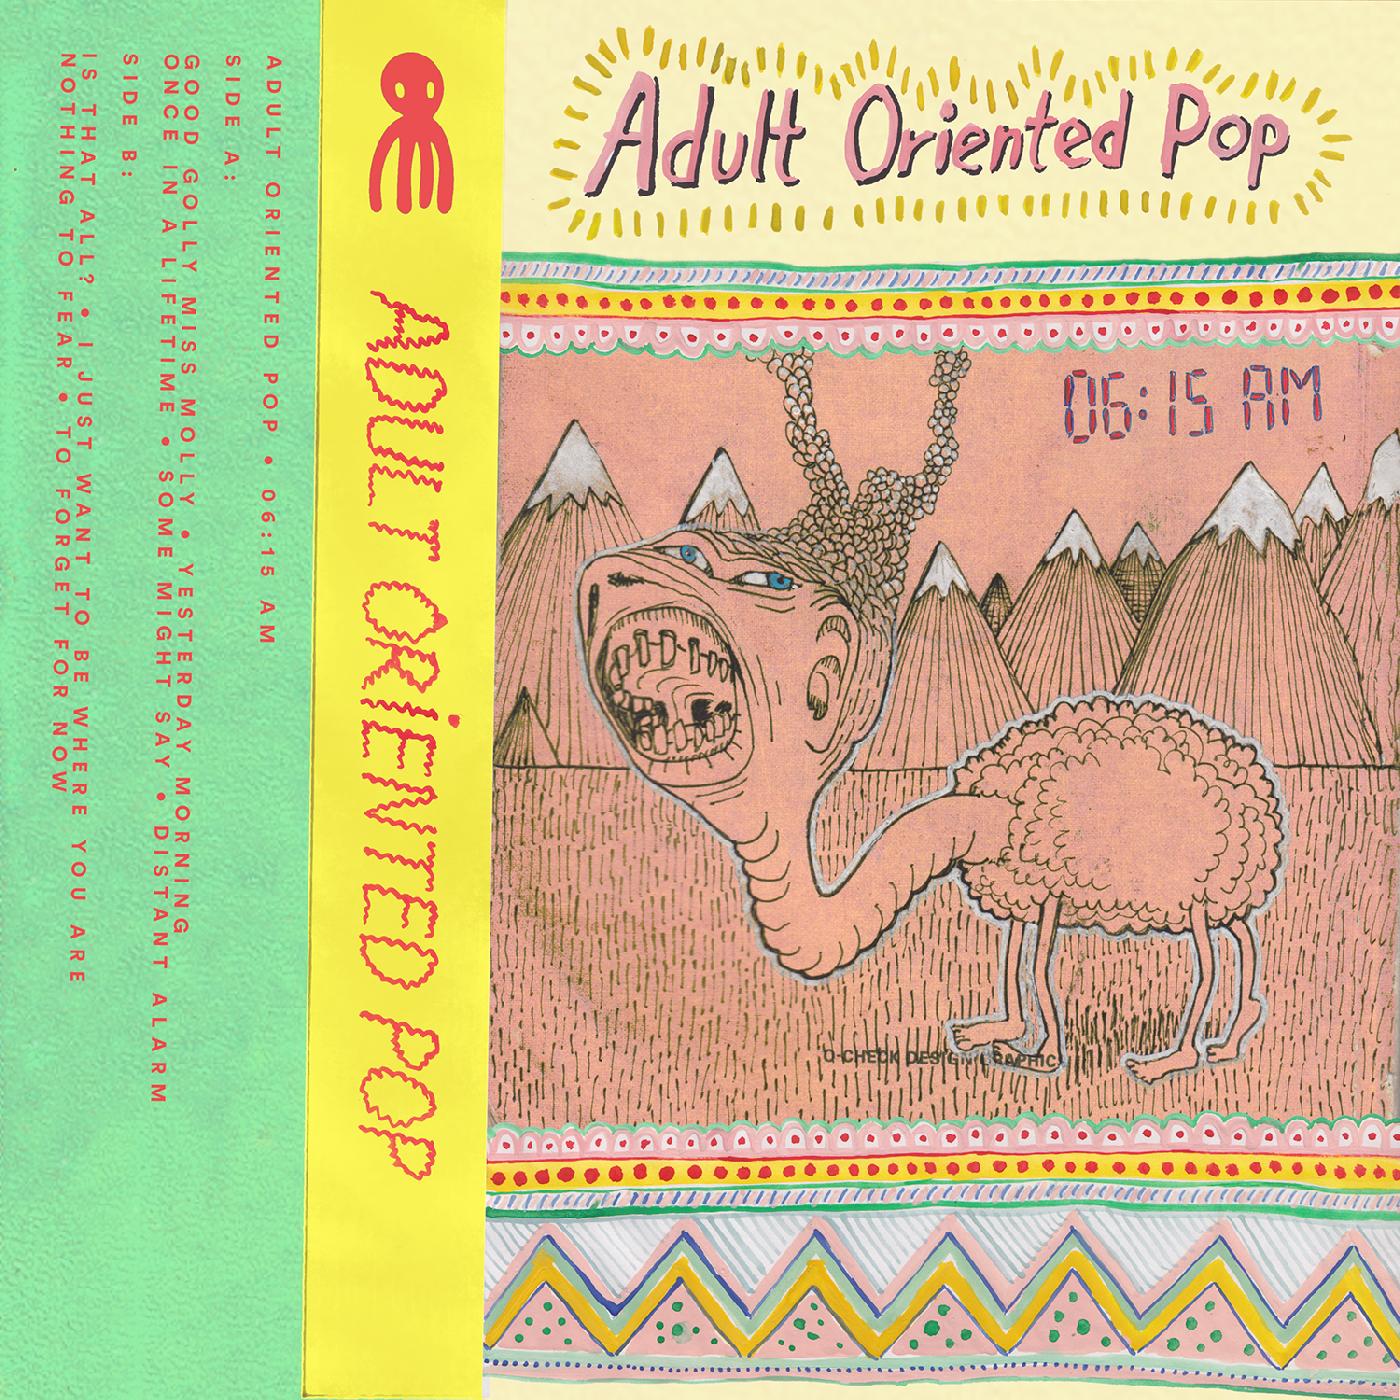 Adult Oriented Pop - 6:15 Am (Vinyl)